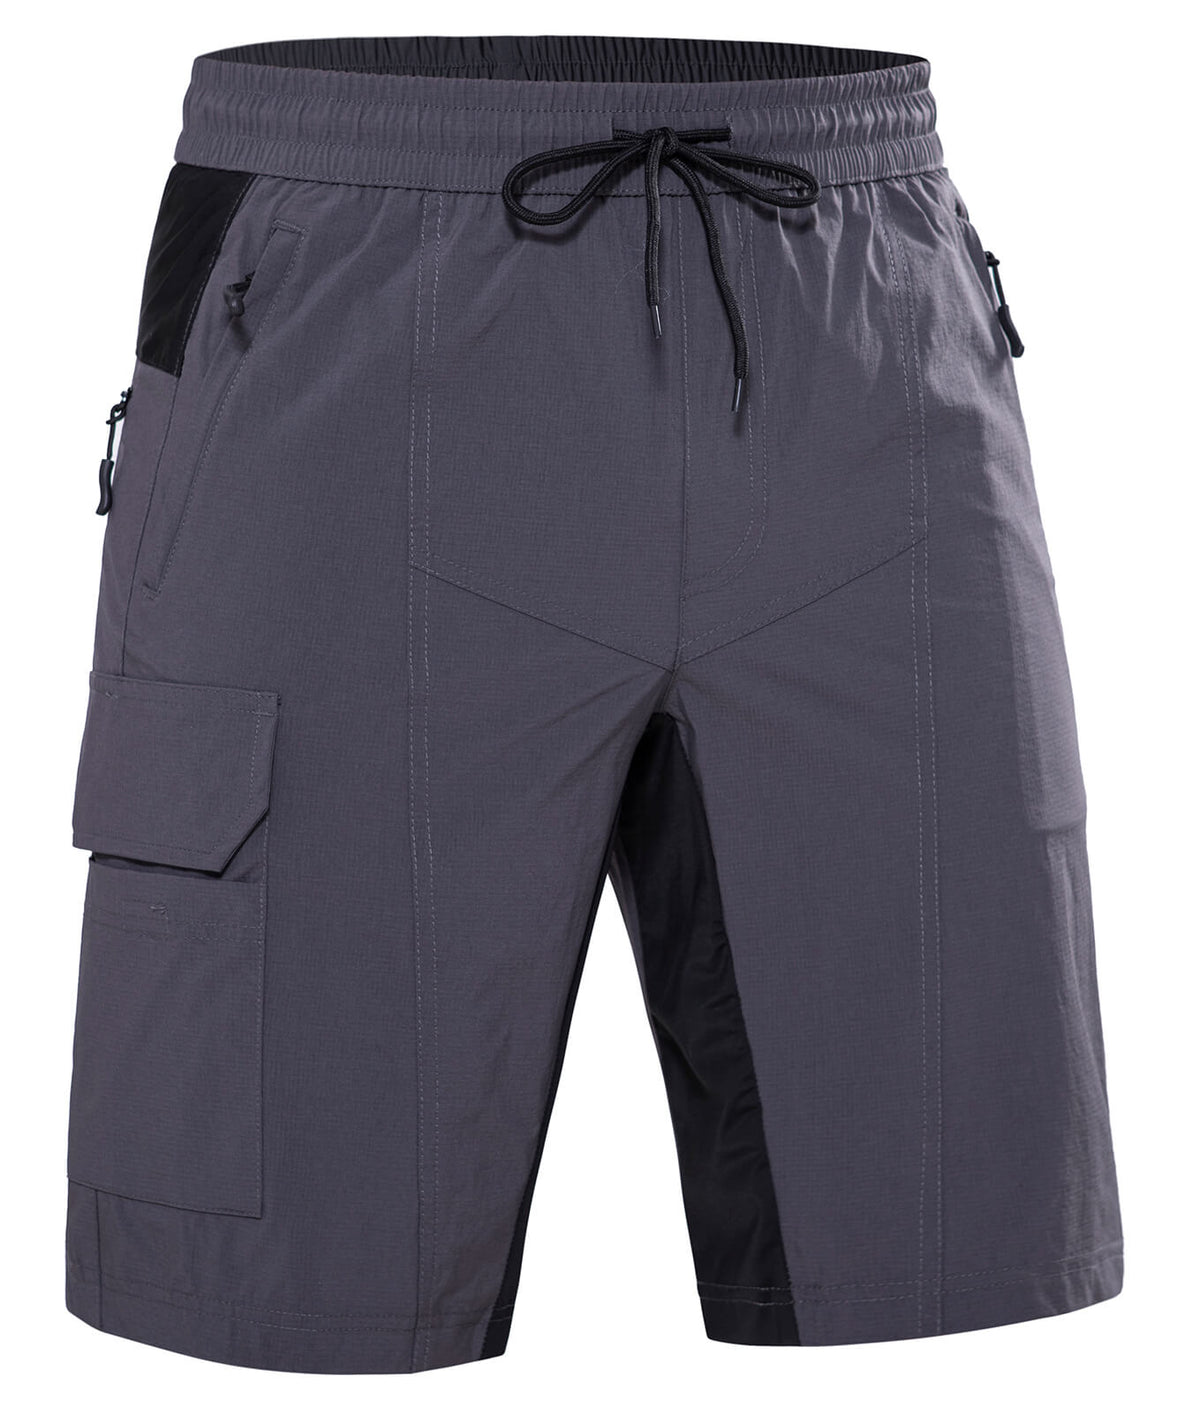 Men's Utility Mountain Bike Shorts #Color_grey